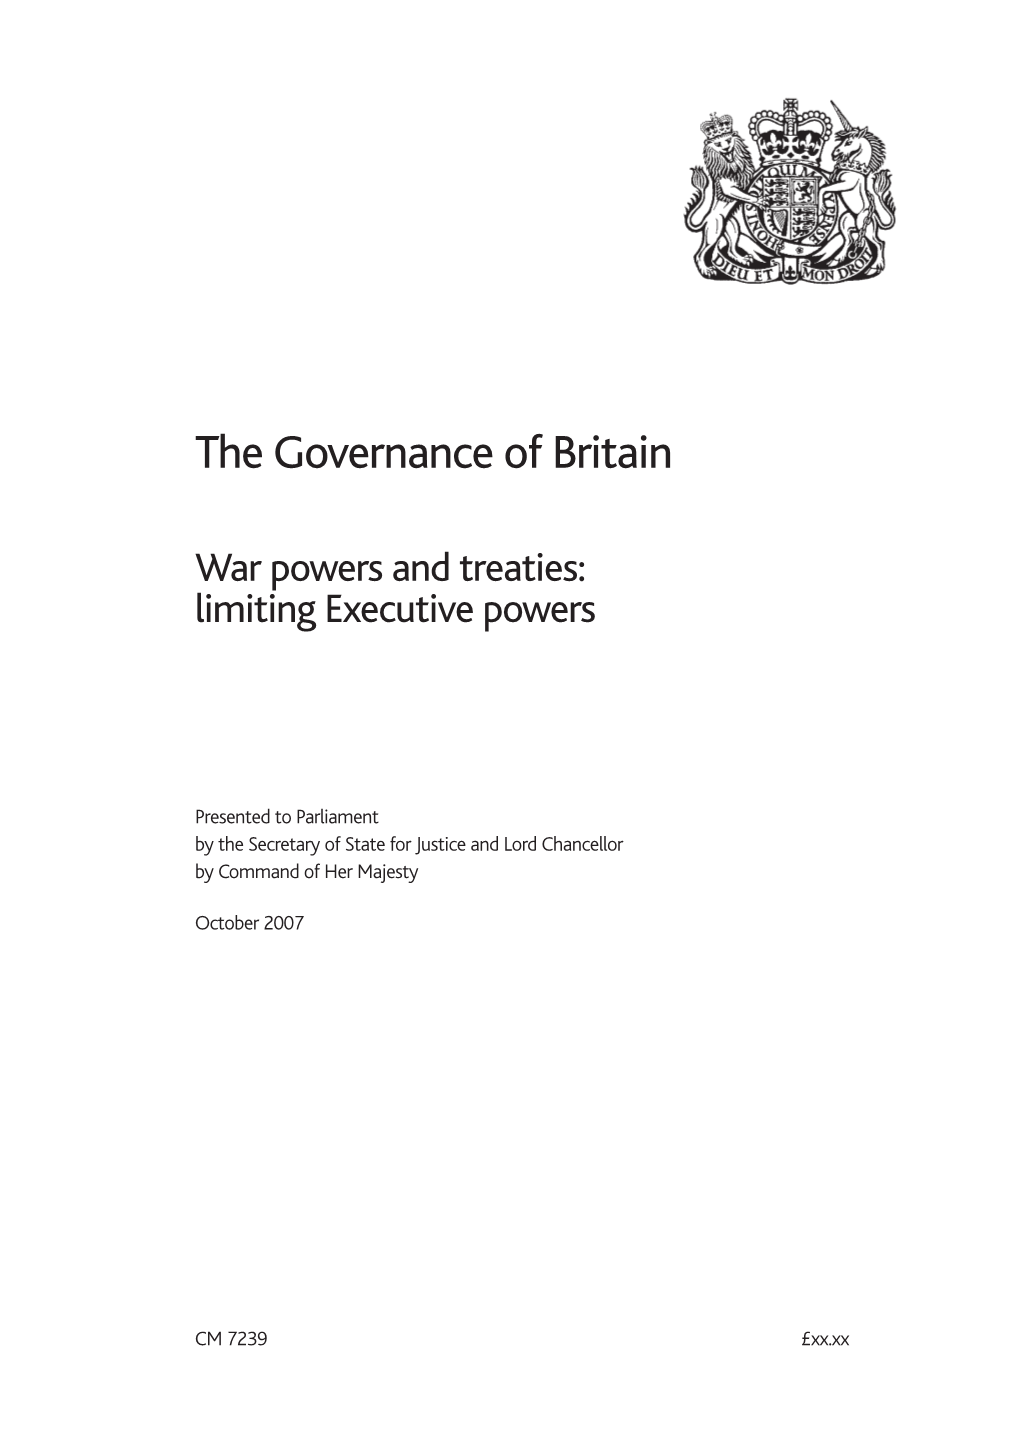 War Powers and Treaties: Limiting Executive Powers